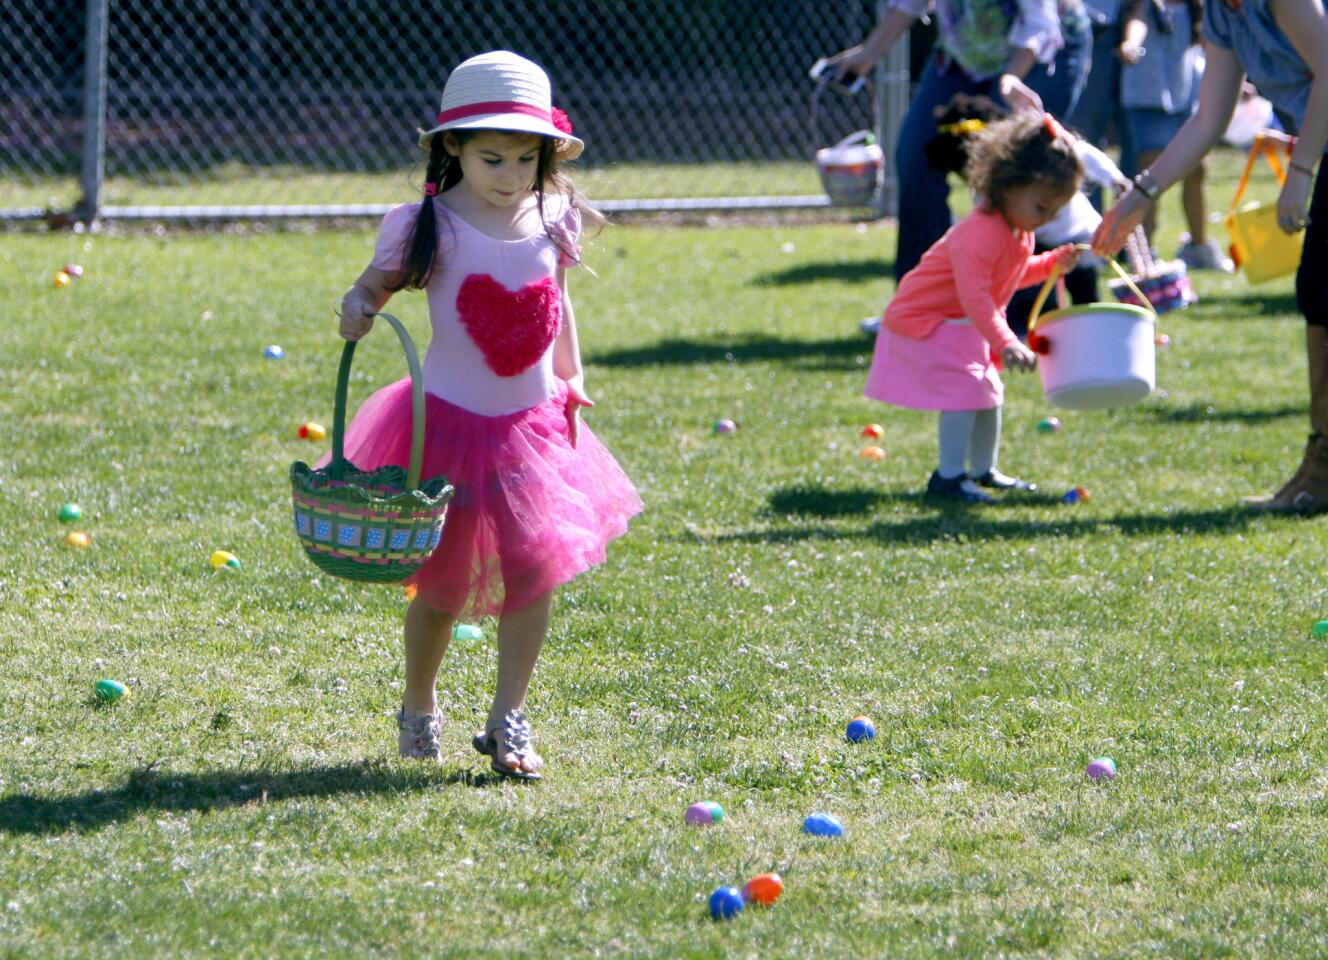 Photo Gallery: The annual Burbank Spring Egg-Stravaganza at McCambridge Park